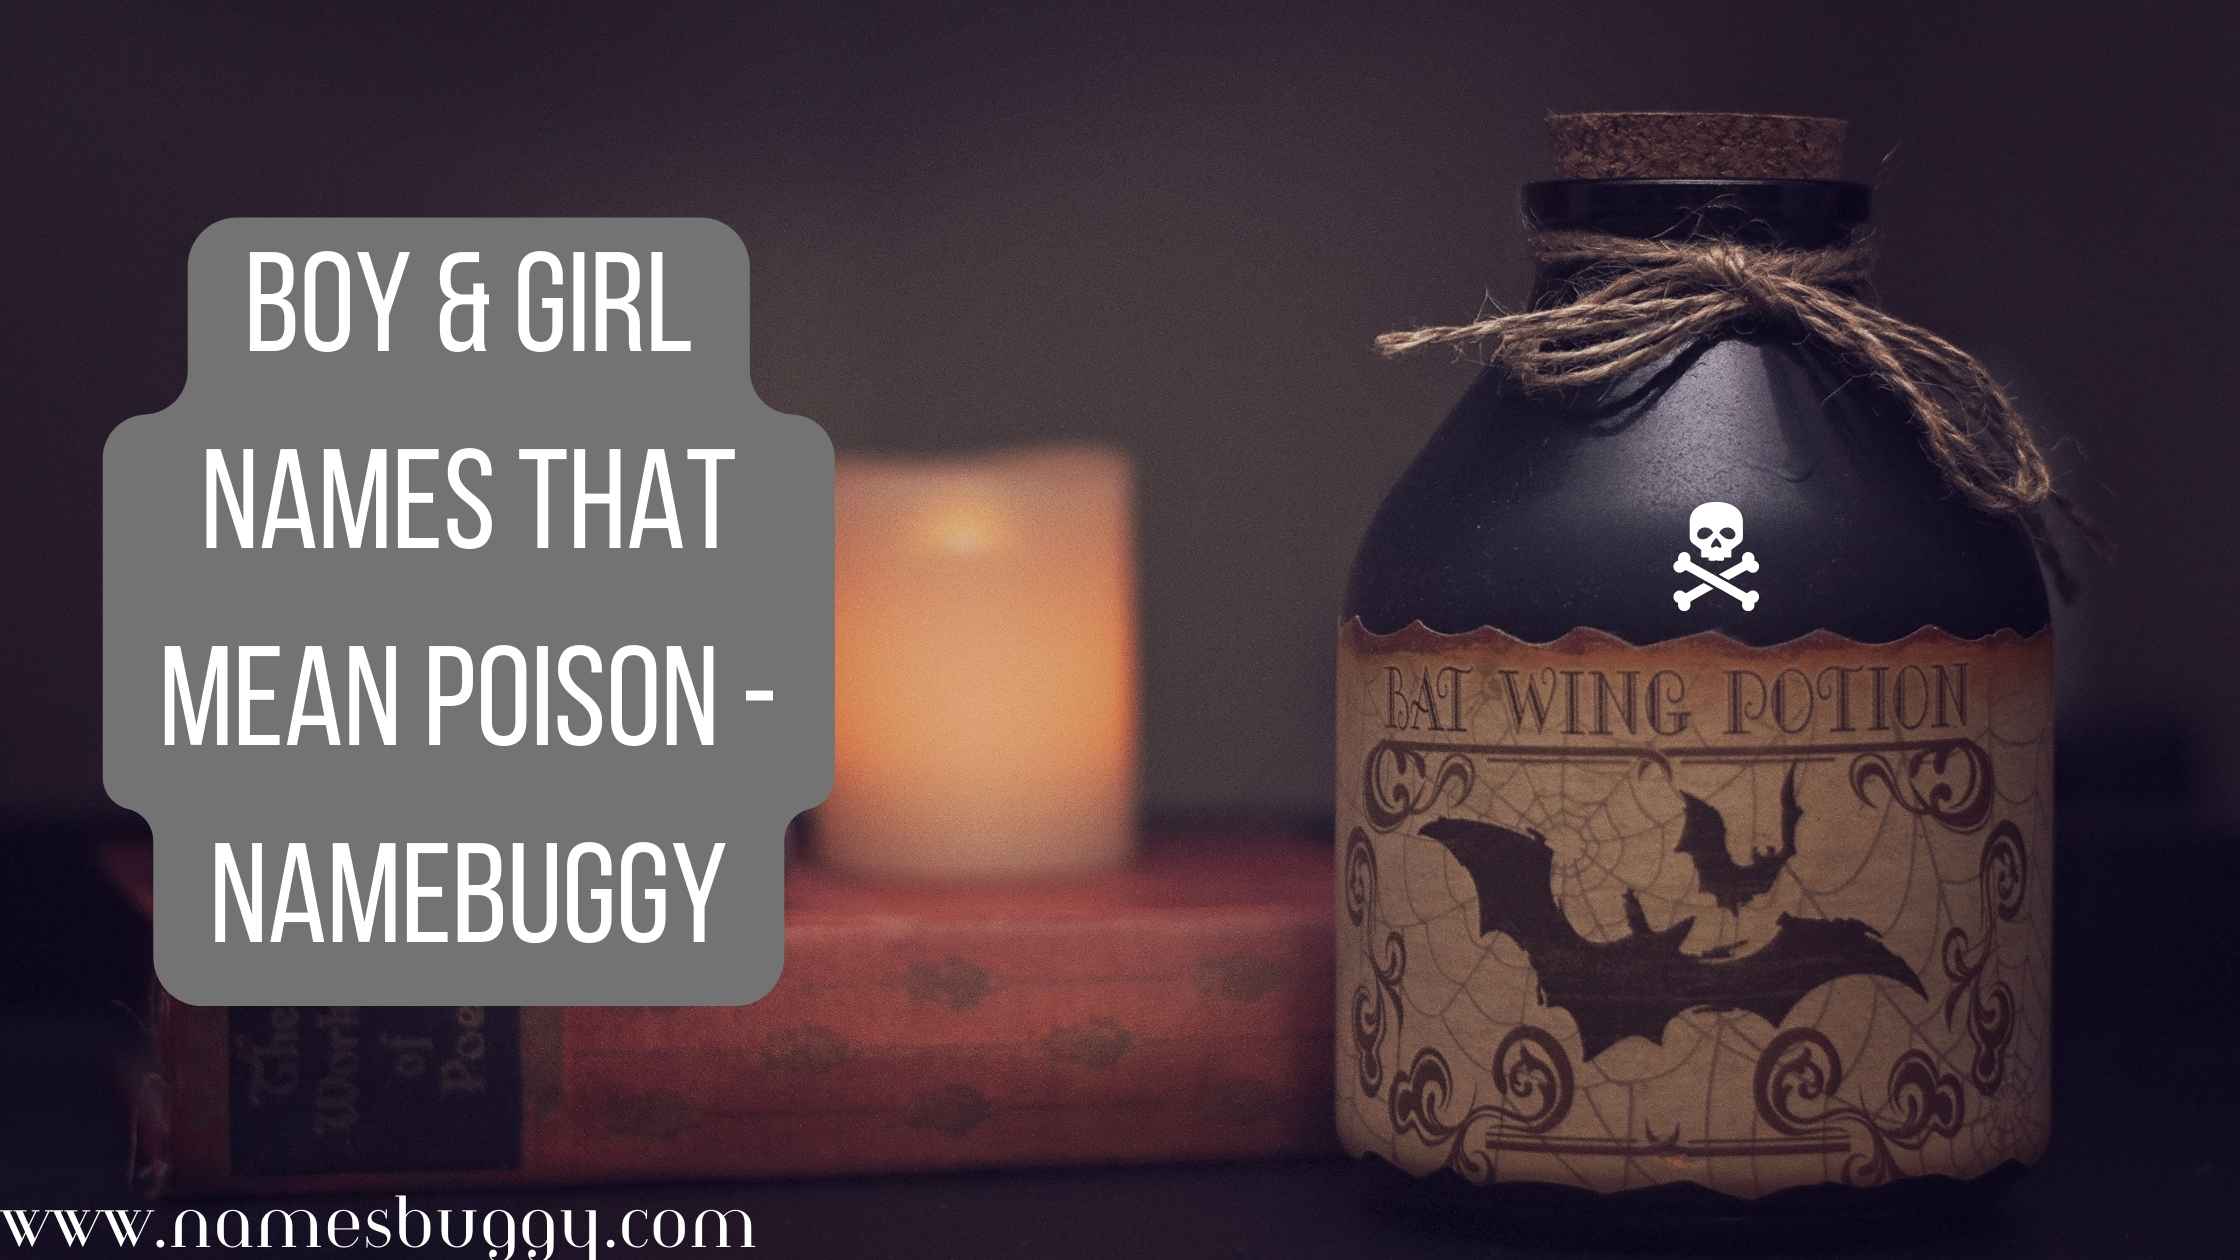 Boy & Girl Names that mean Poison - Namebuggy